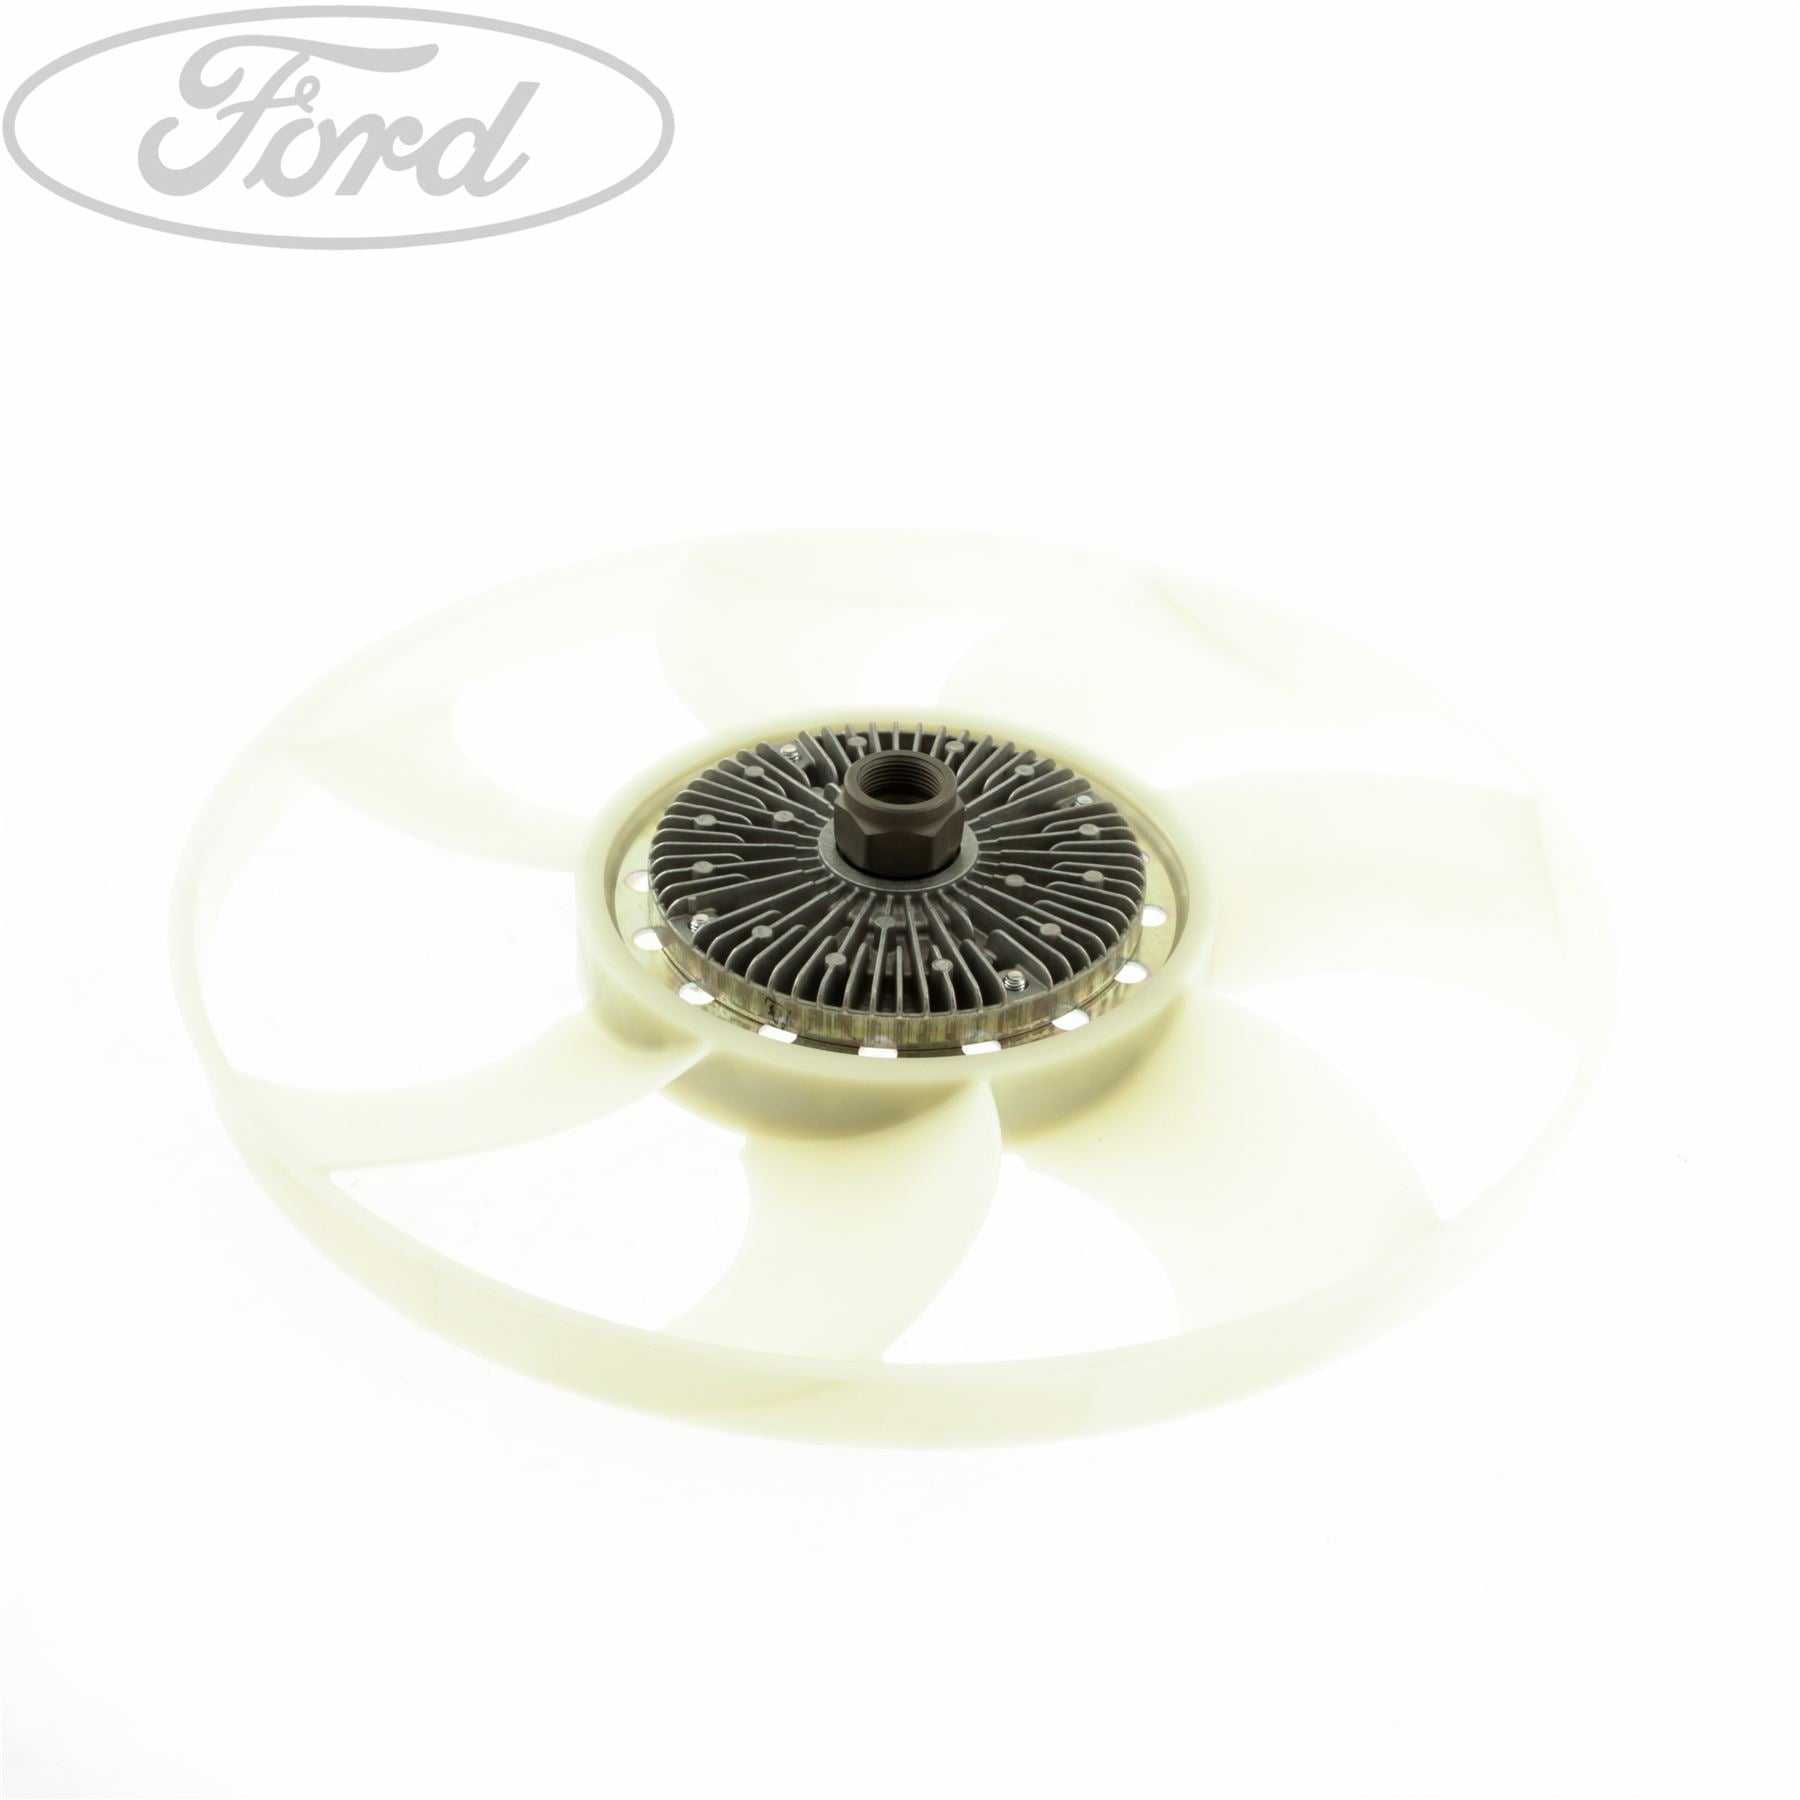 Ford, TRANSIT 2.2 2.4 TDCI ENGINE COOLING FAN 2006-2014